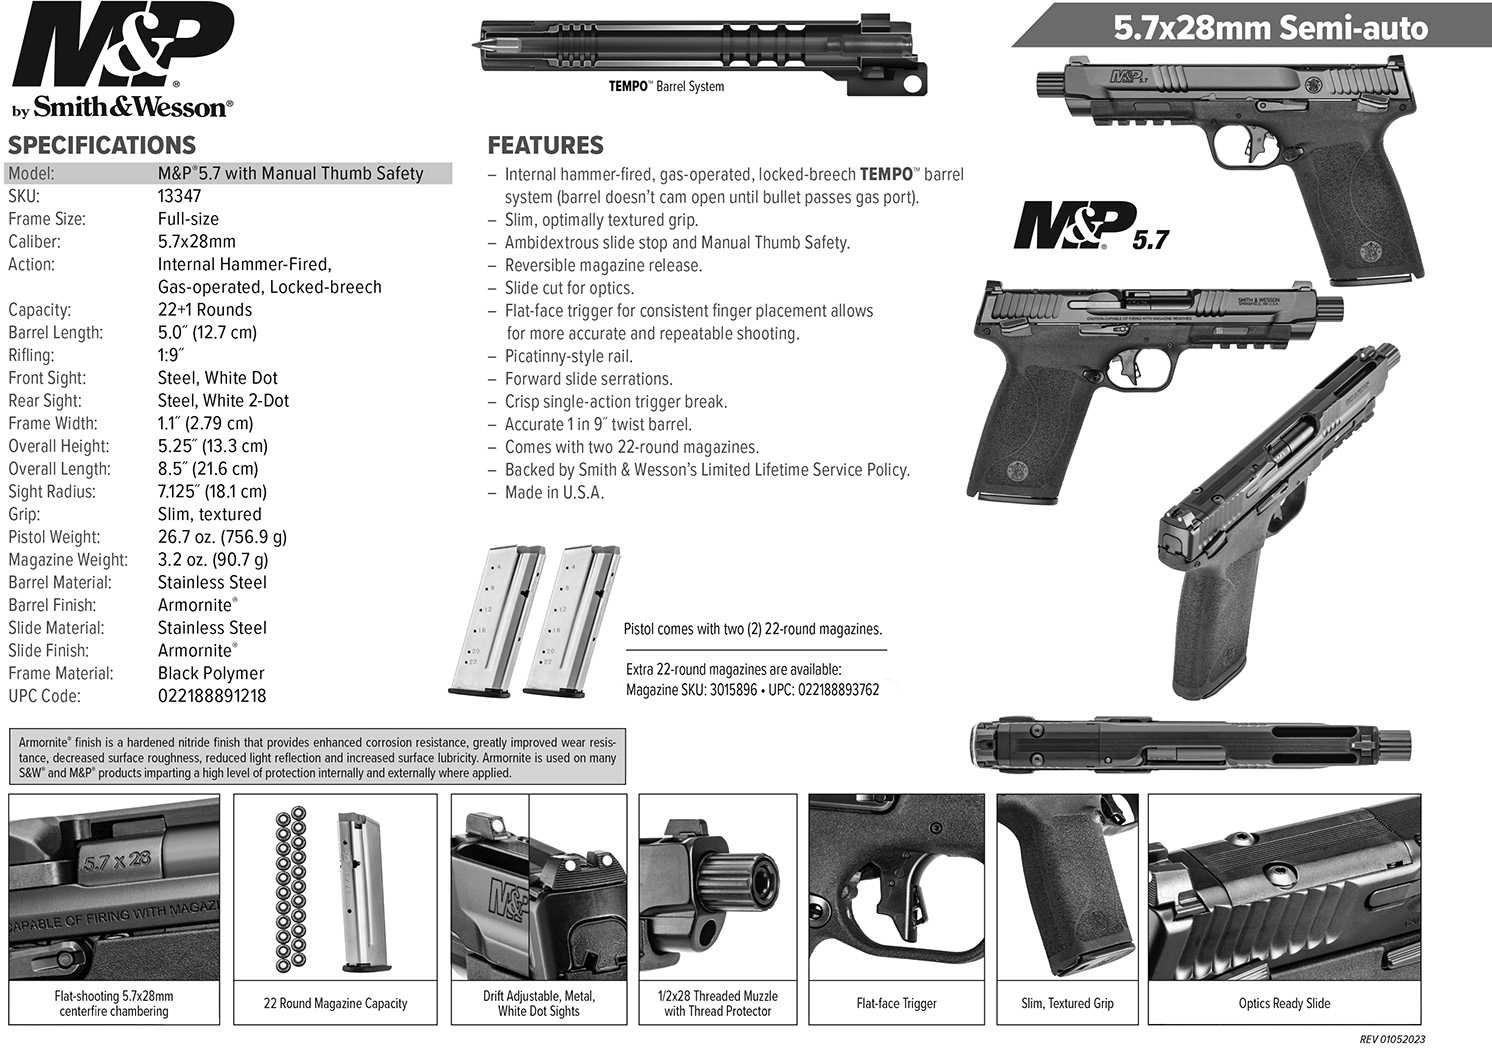 Smith & Wesson M&P 5.7 Pistol 5.7x28mm 5" Threaded Barrel Optics Ready